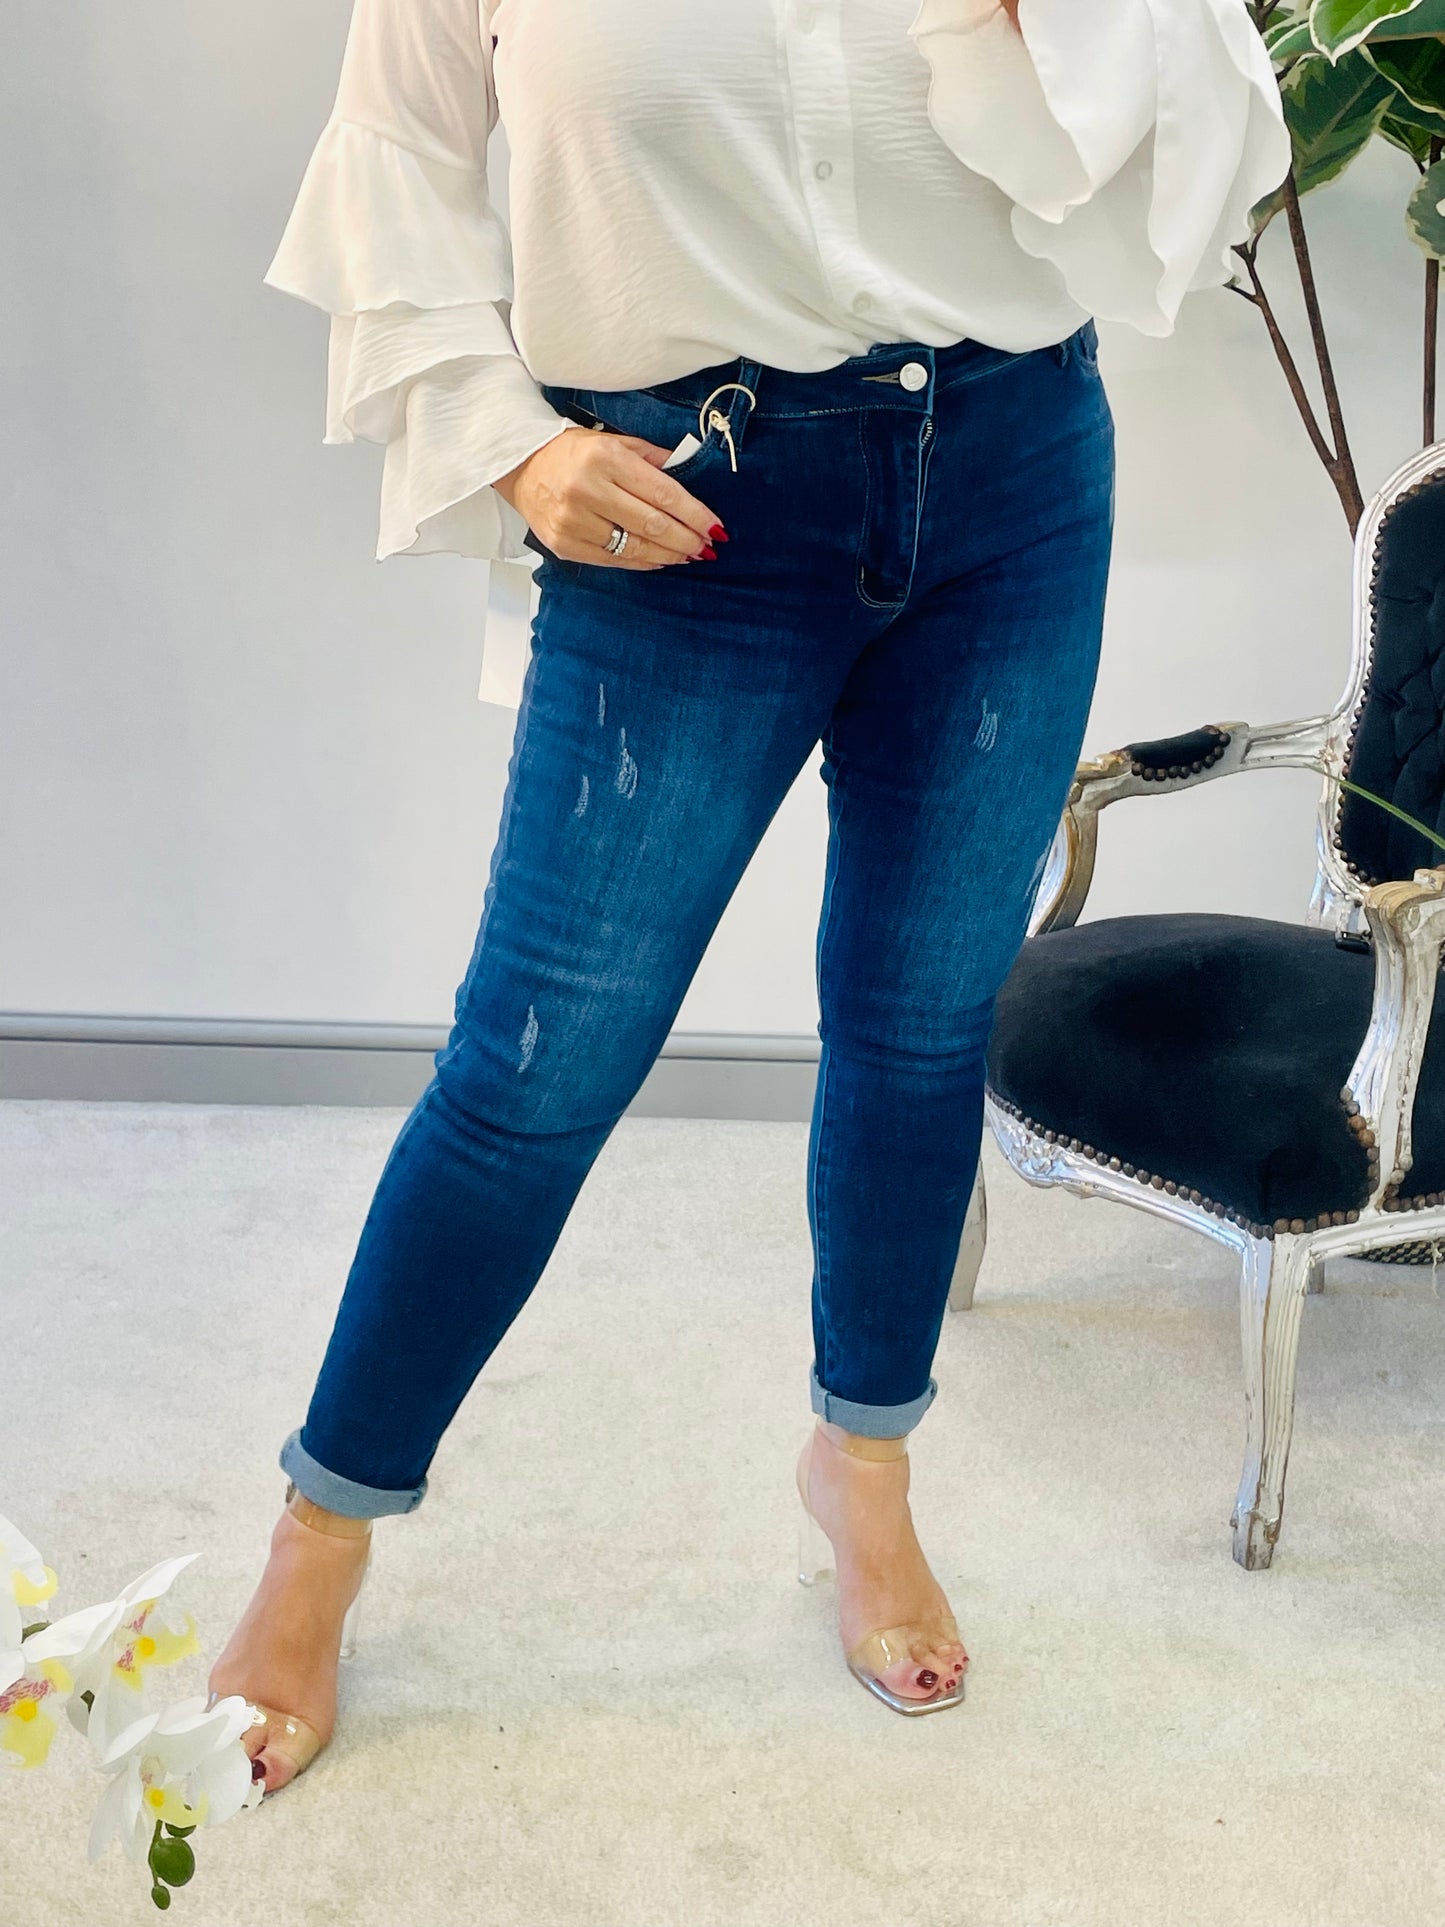 The SCARLET skinny dark denim jeans - sizes 6 to 14